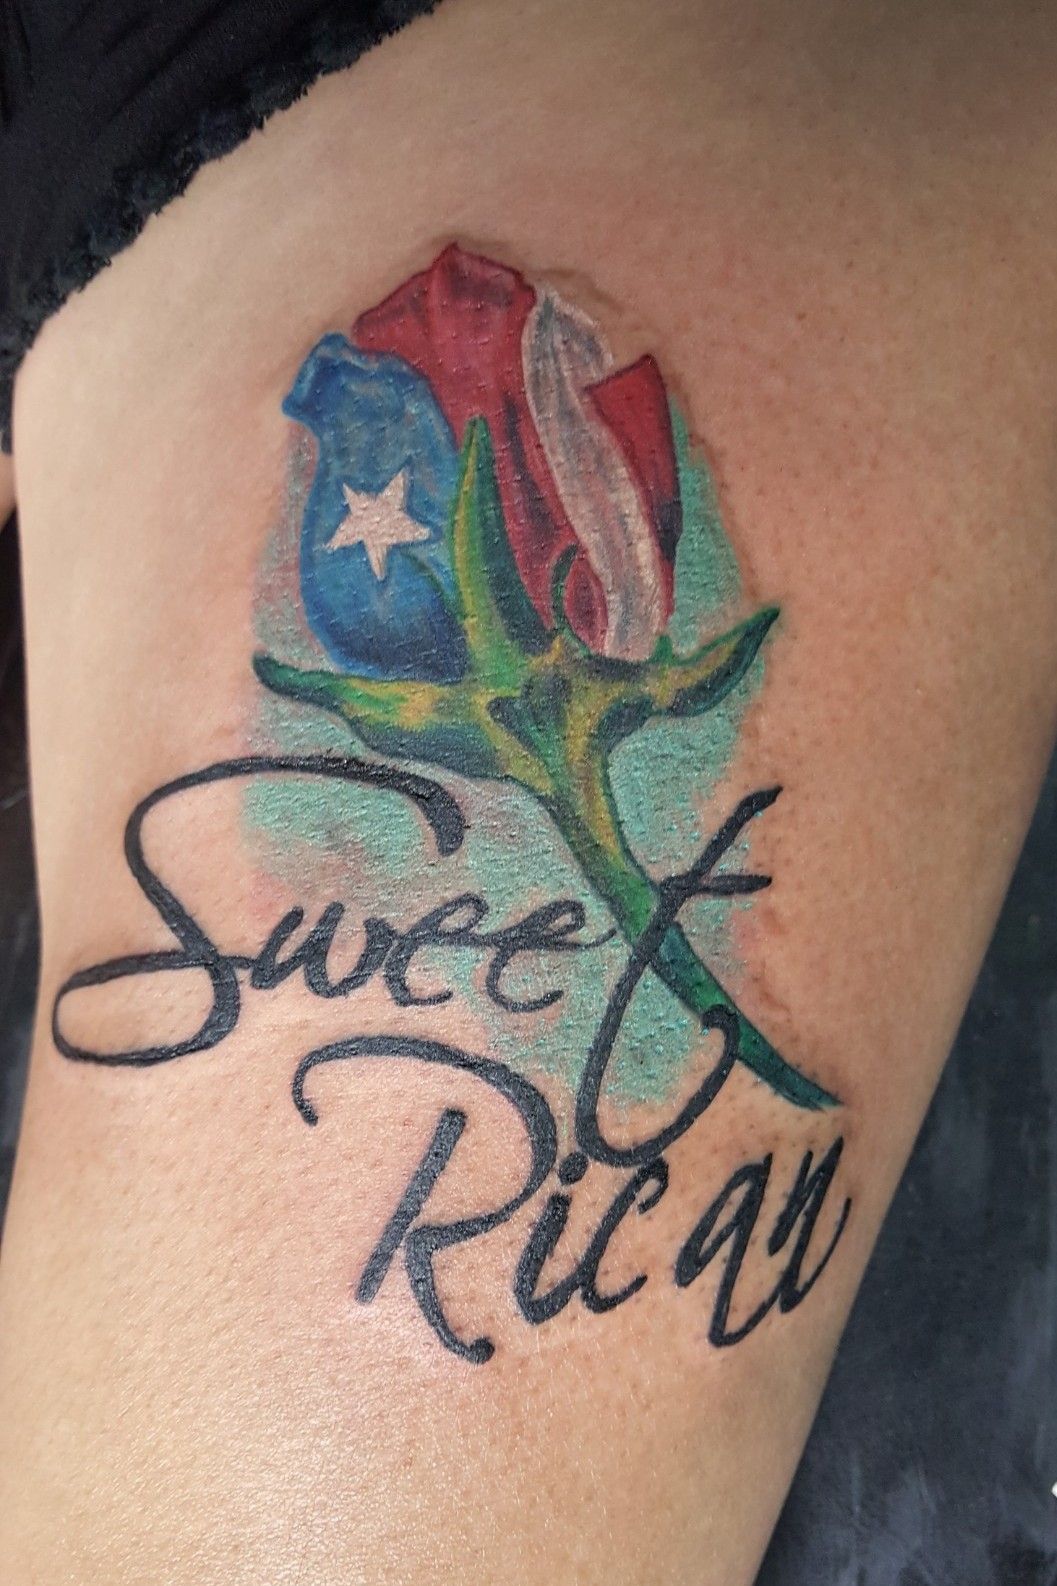 Rebel Rose tattoo